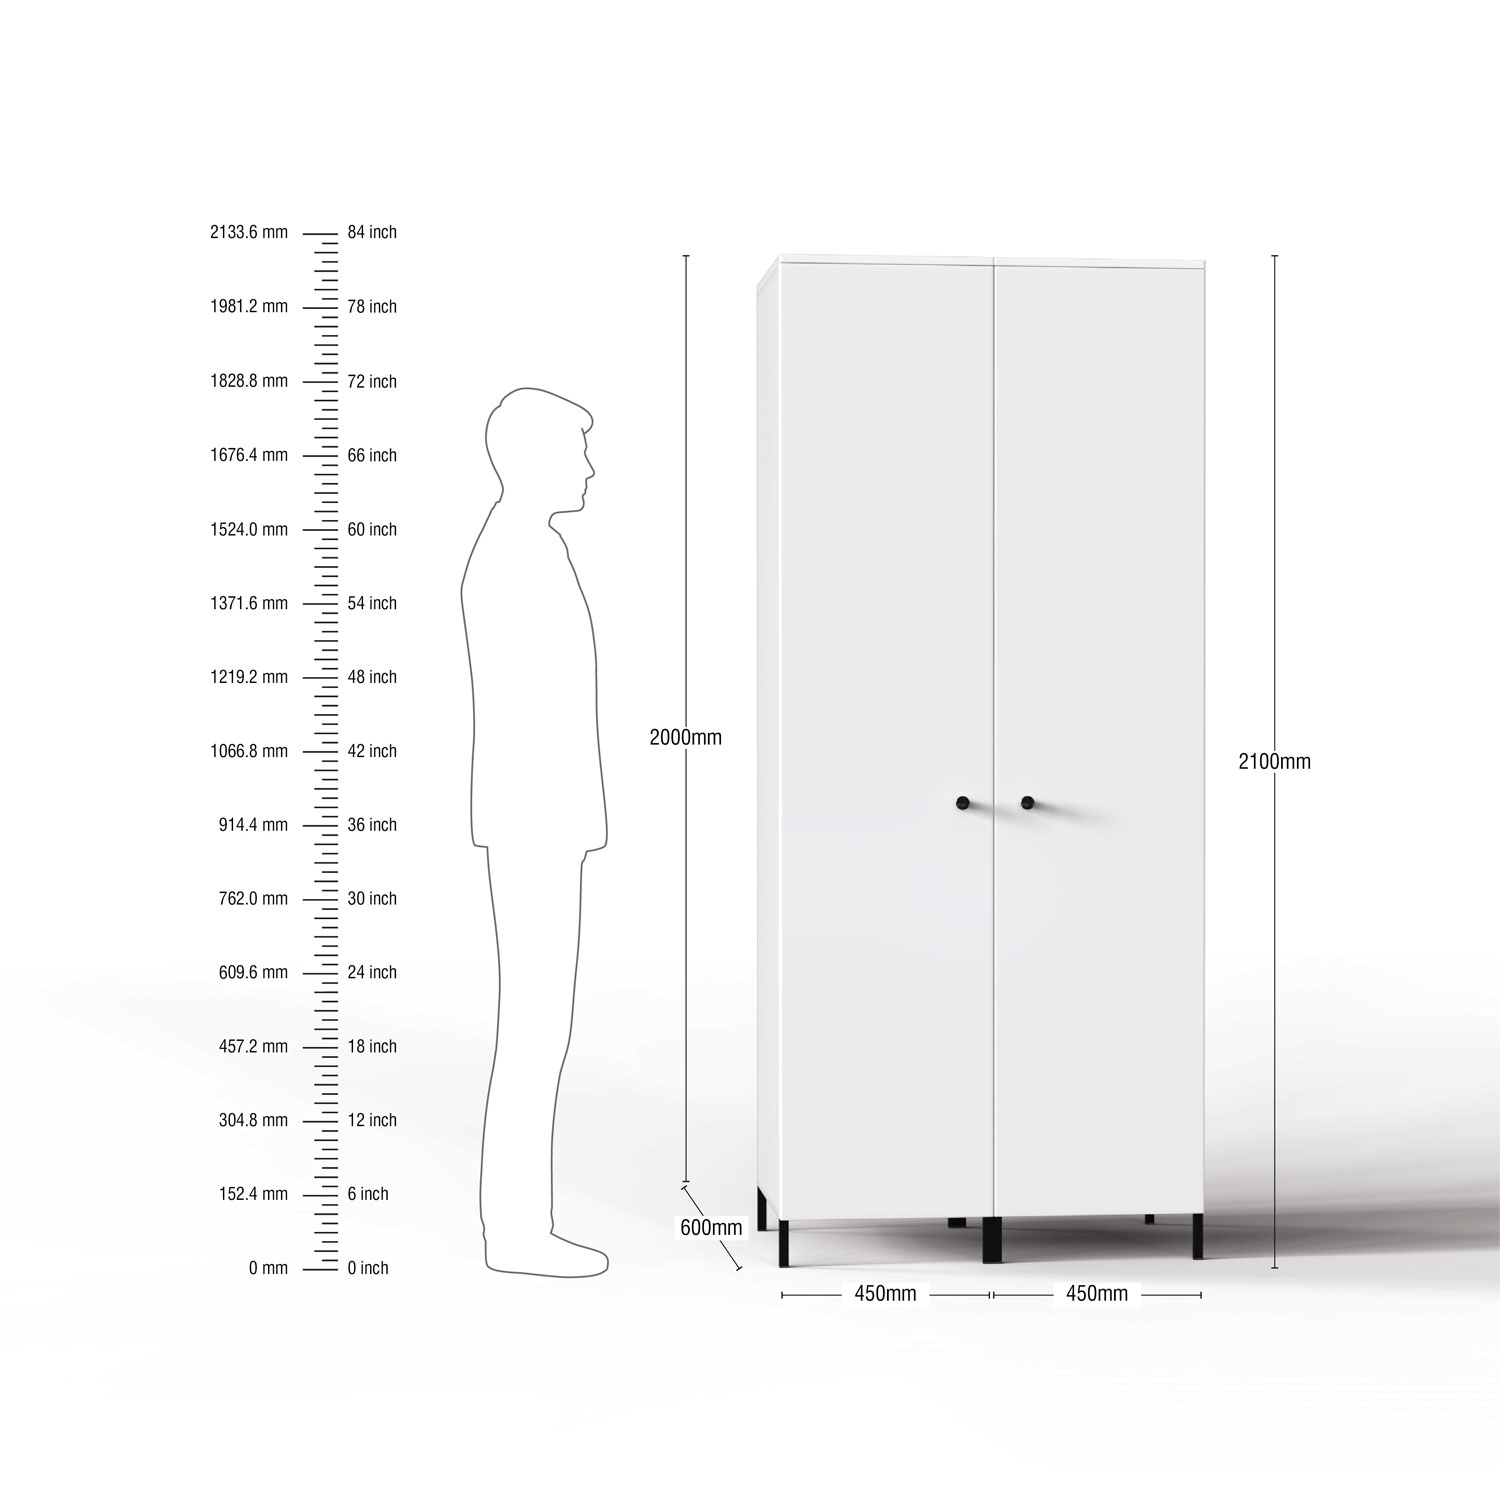 Lambent 2 Door Wardrobe in White and Slate Finish – DWRD001 C16